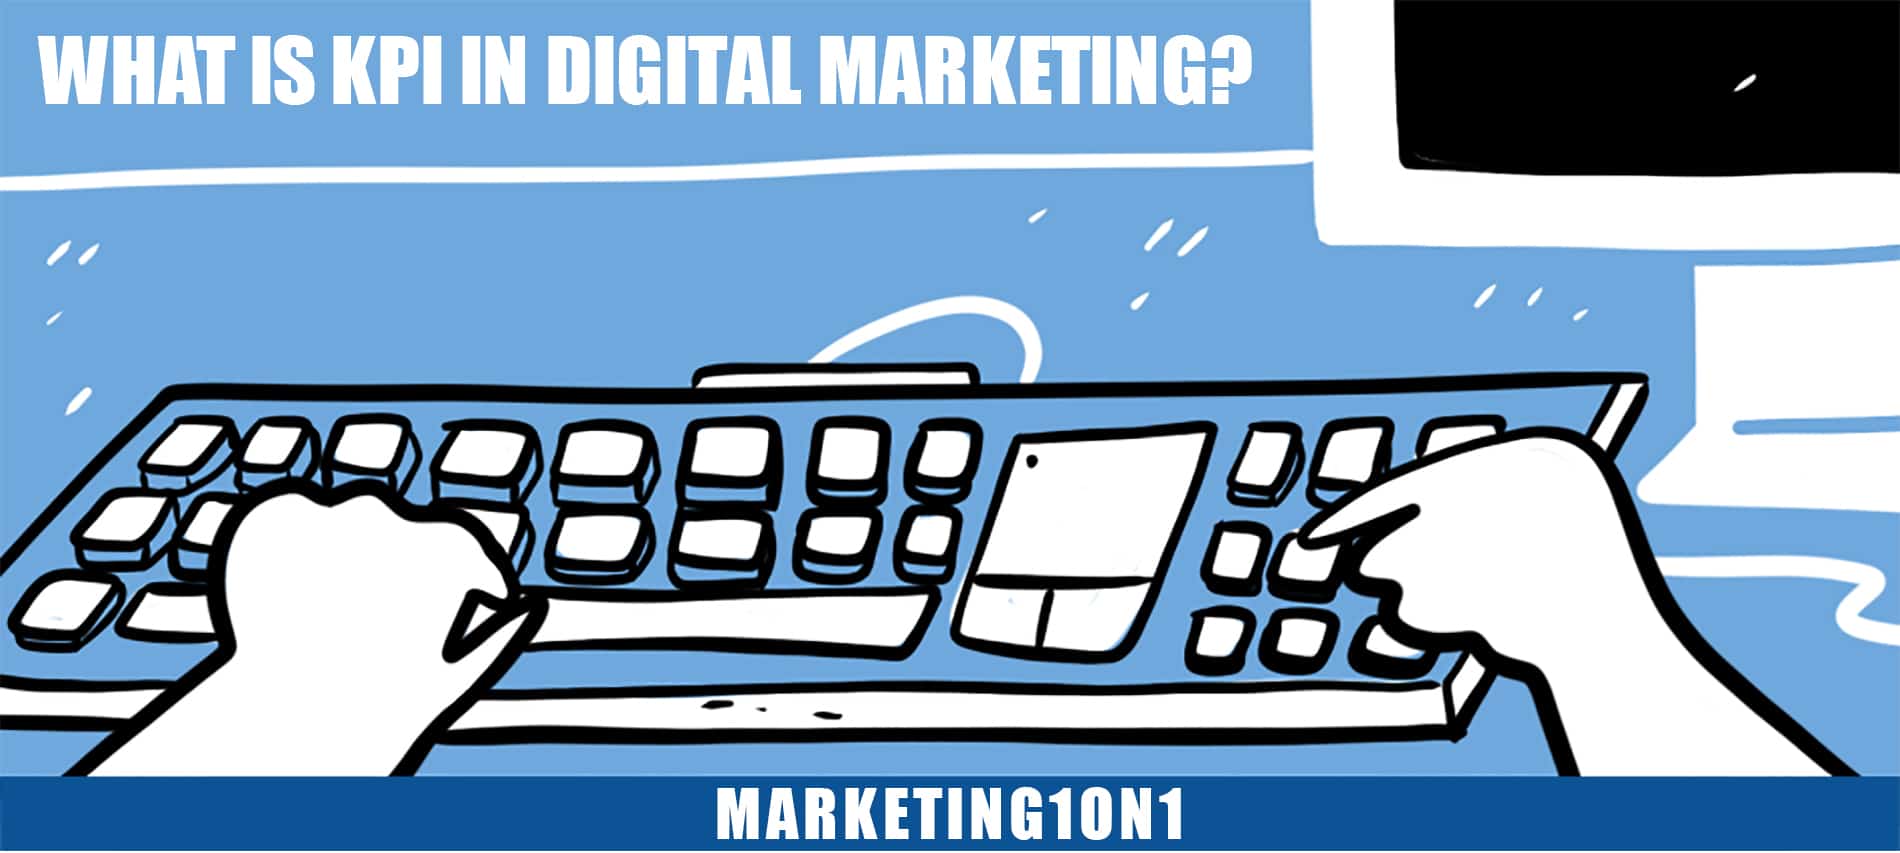 What is KPI in digital marketing?